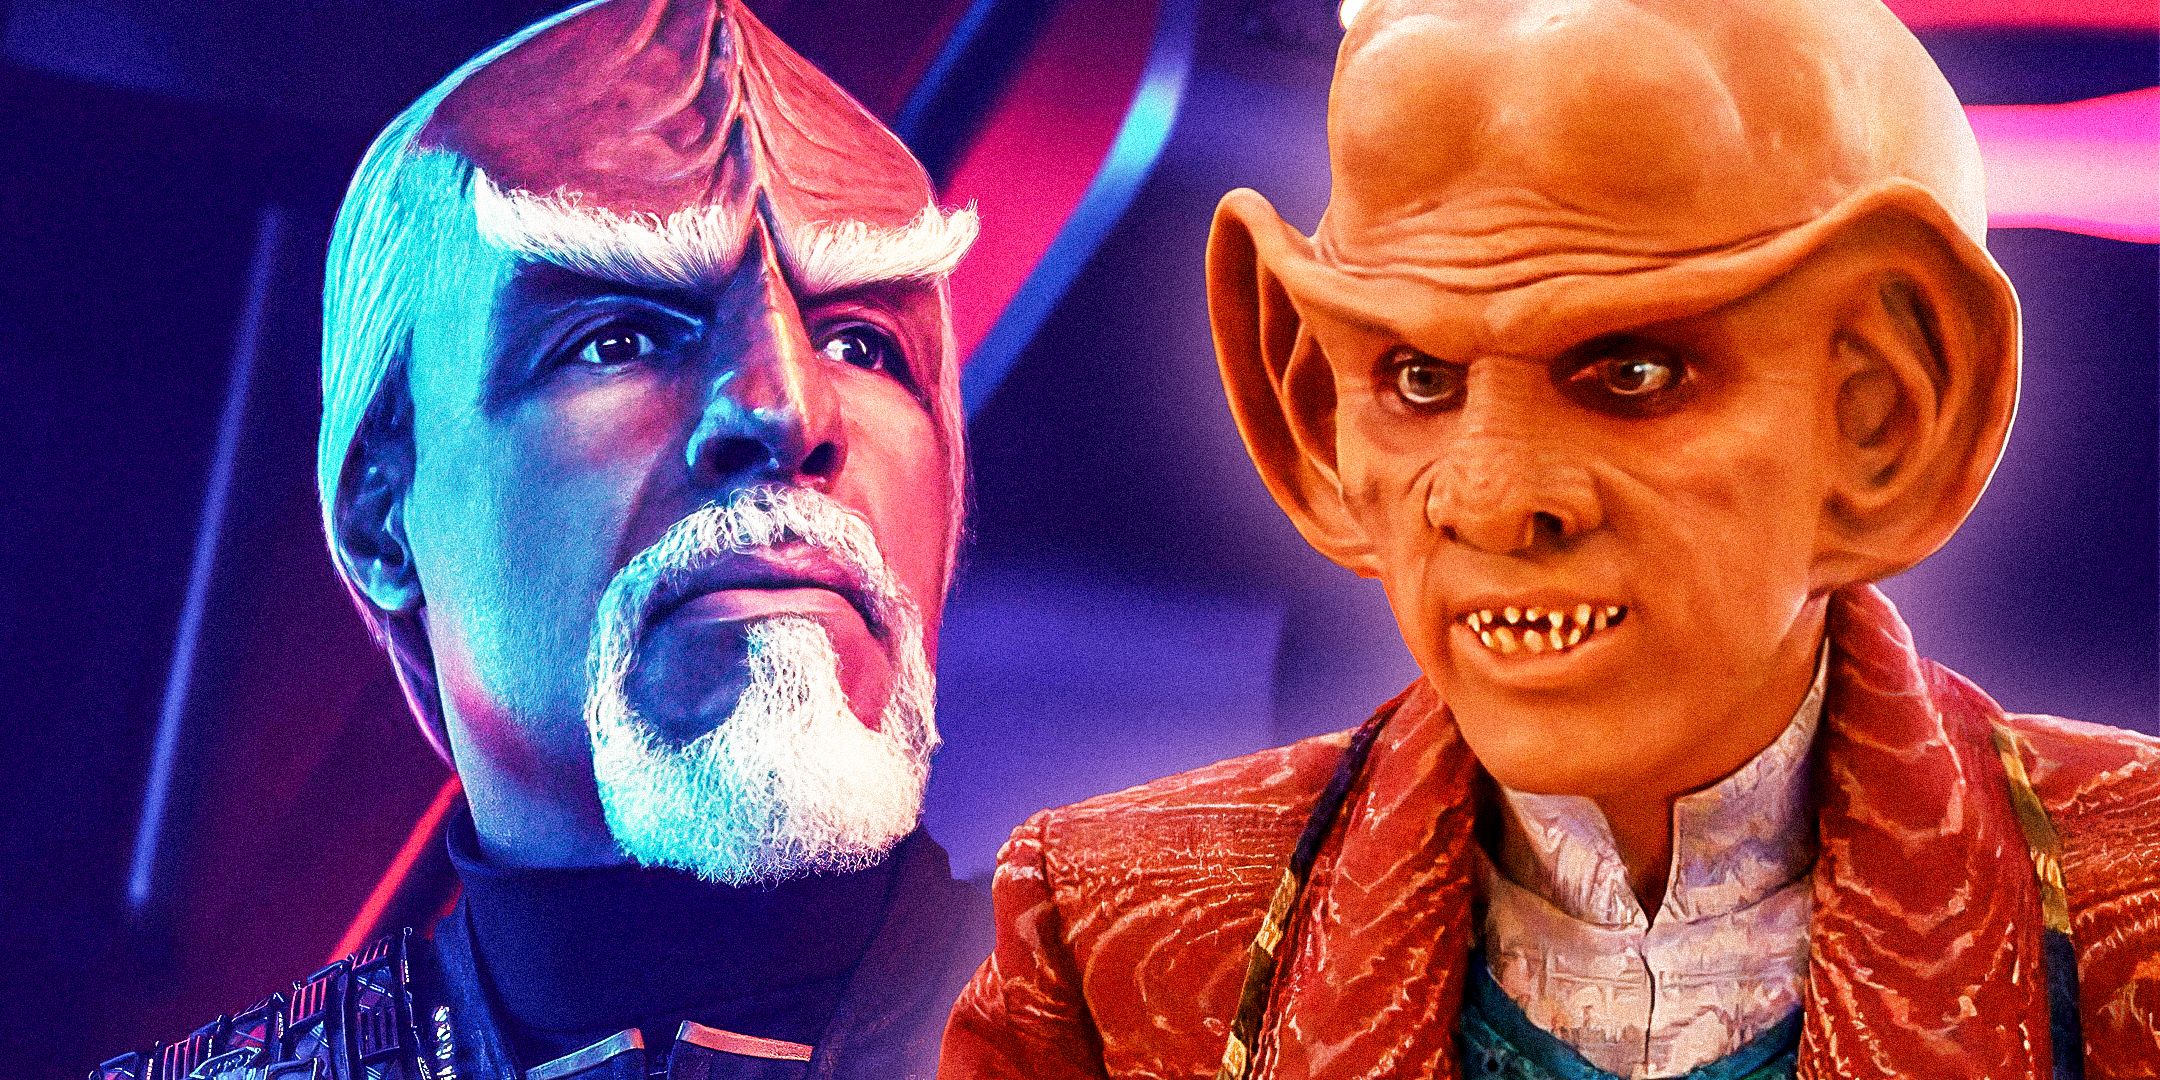 Michael Dorn as Worf and Armin Shimerman as Quark in Star Trek